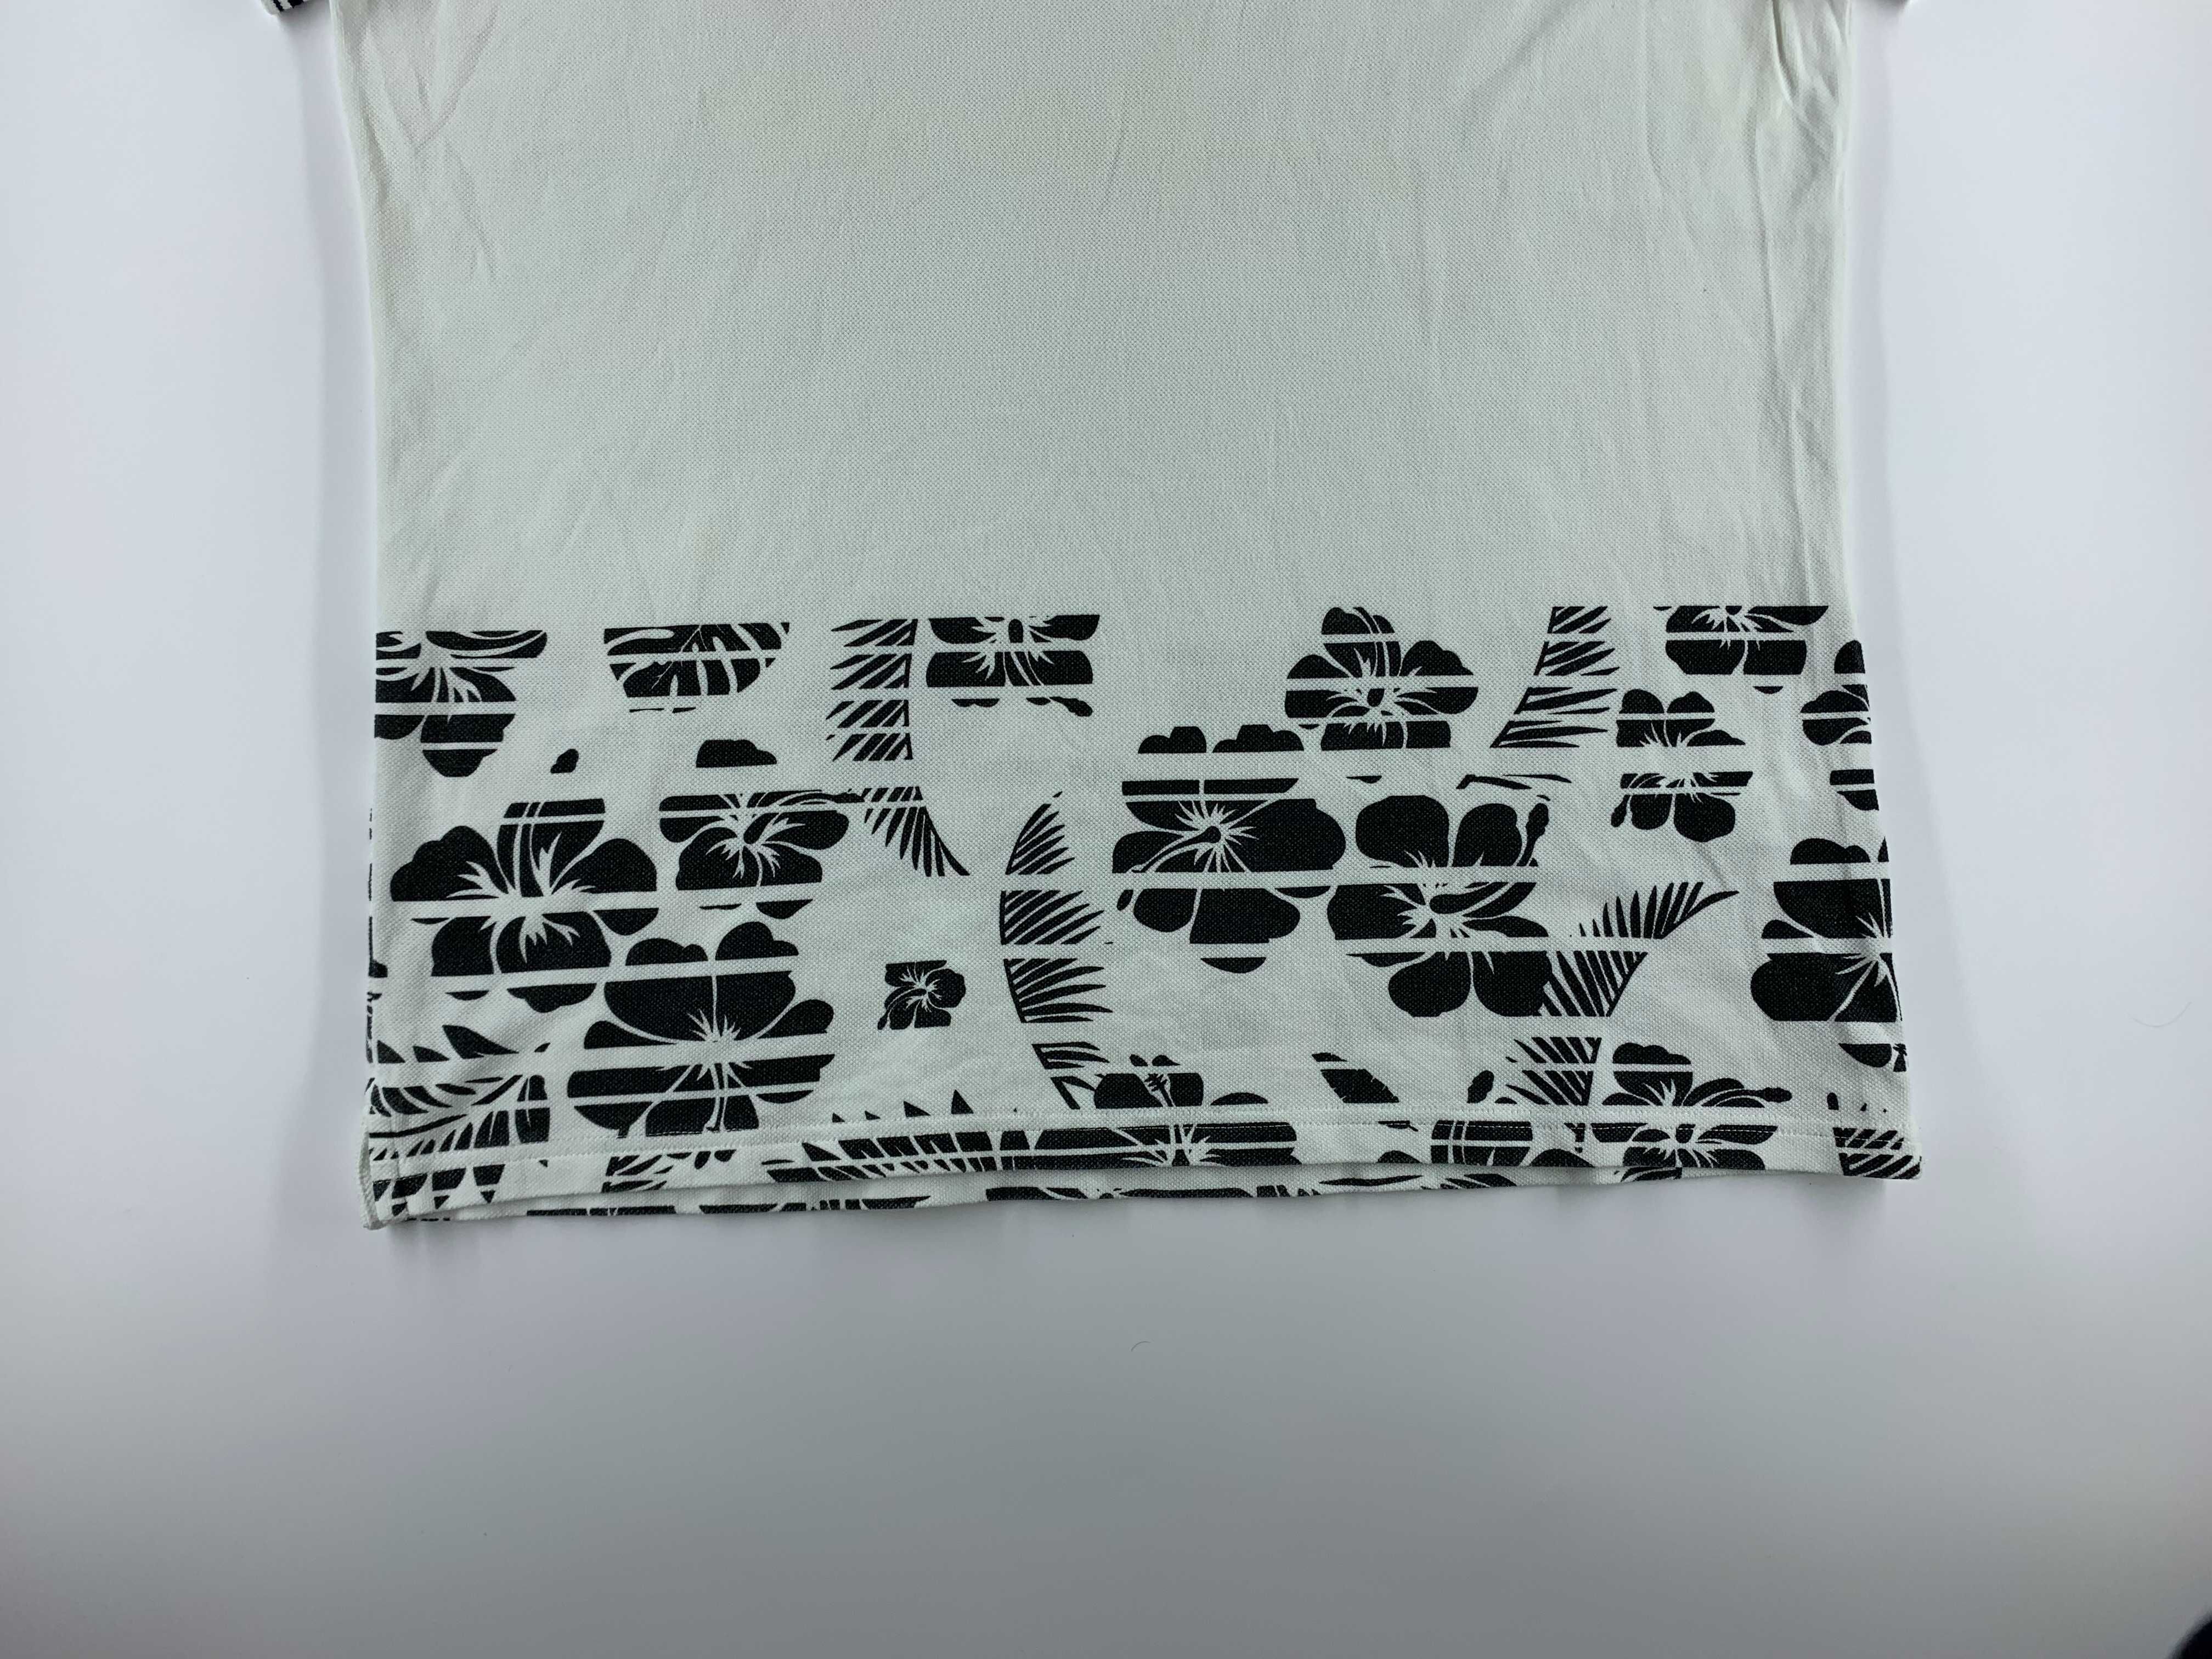 Мужская поло футболка Iceberg Polo L-XL